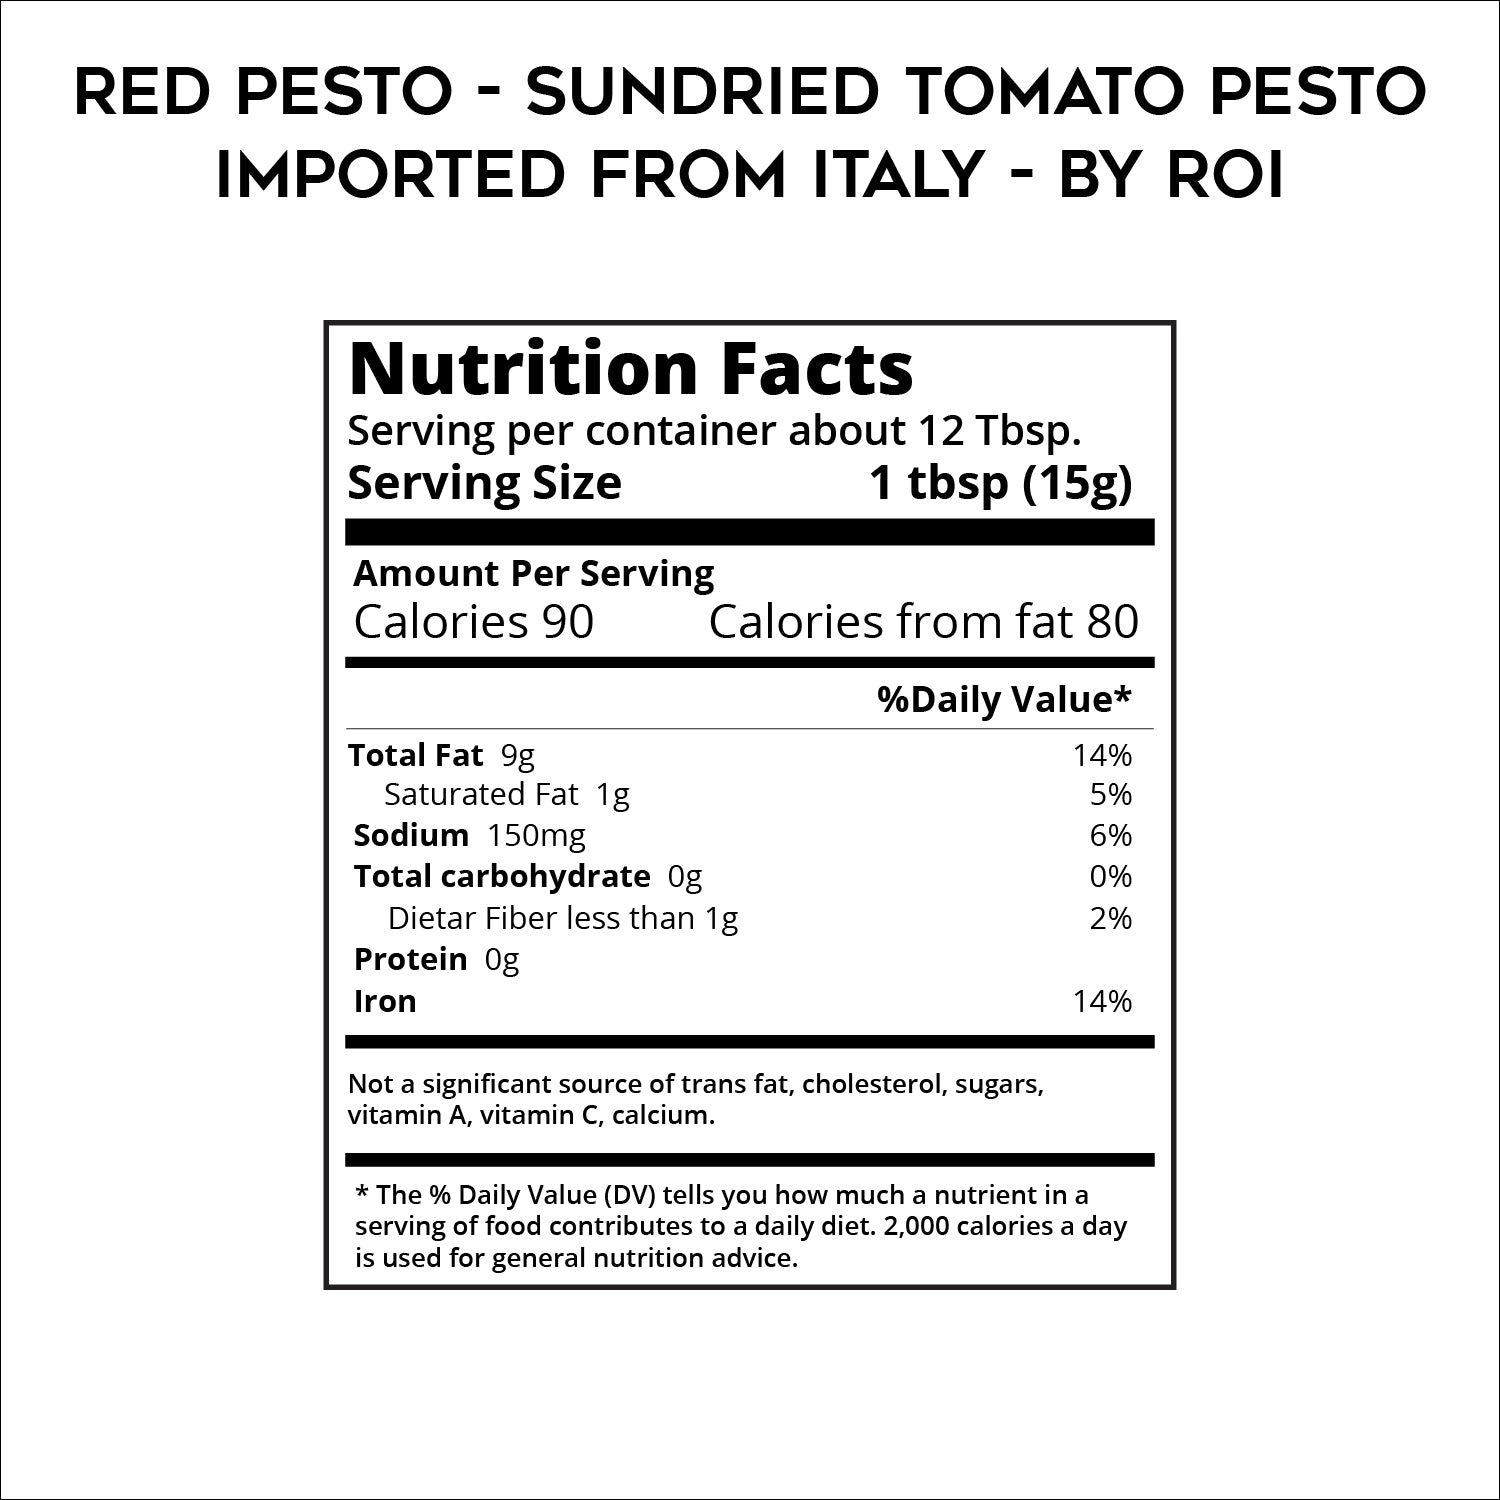 Red Pesto - Sundried Tomato Pesto - Imported from Italy - by ROI